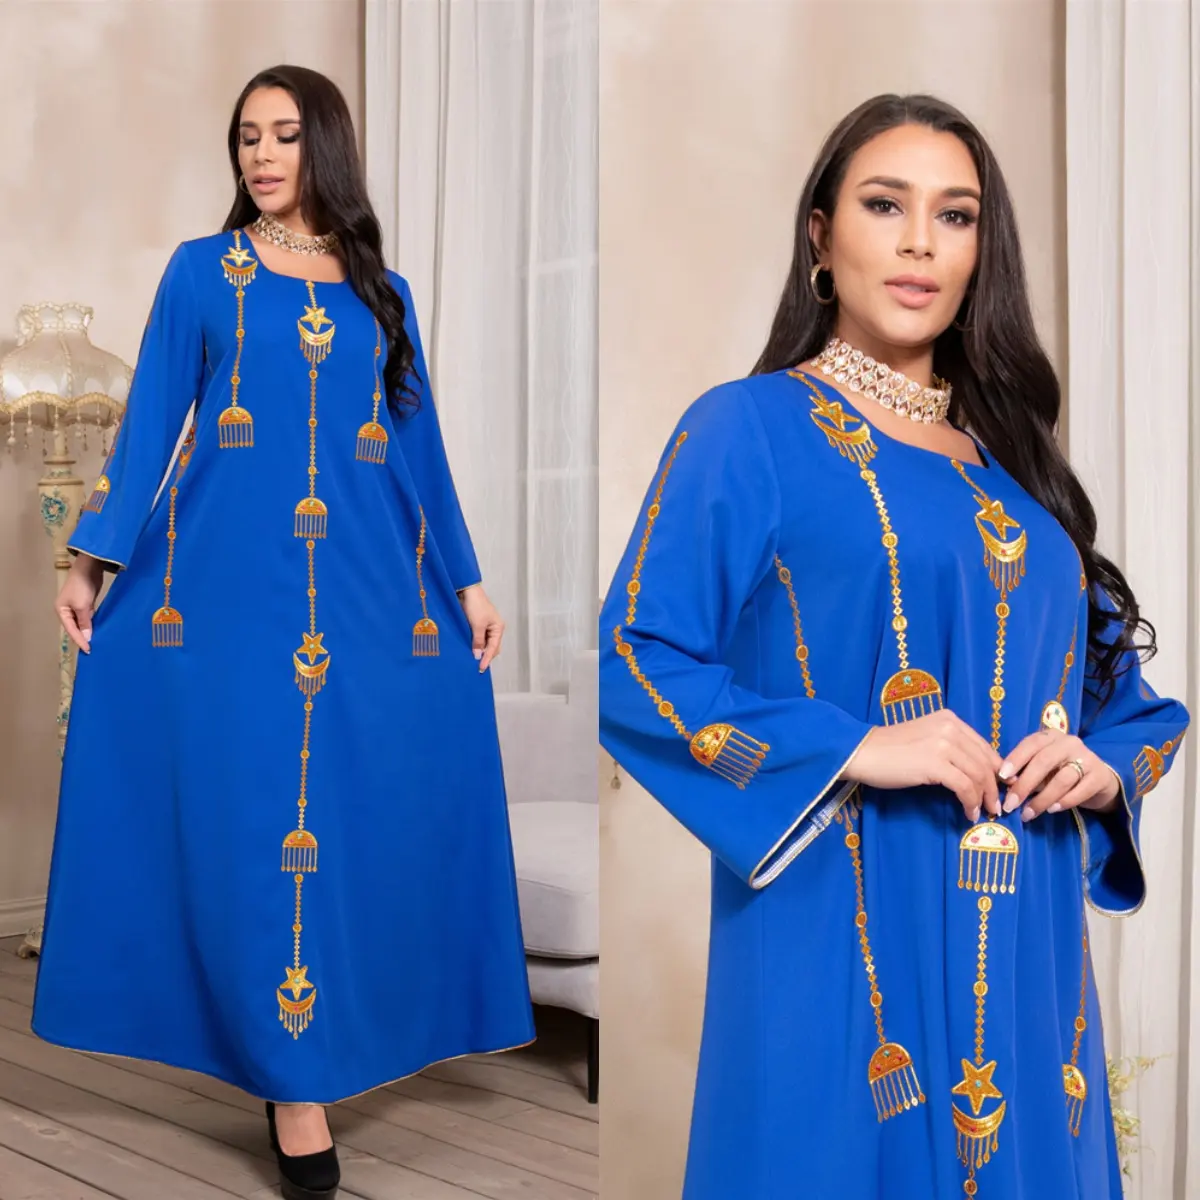 Bule Abaya Hồi Giáo Turco Dubai Ramadan Đầm Ả Rập Áo Choàng Abaya Thanh Lịch Áo Abaya Hồi Giáo Áo Kaftan